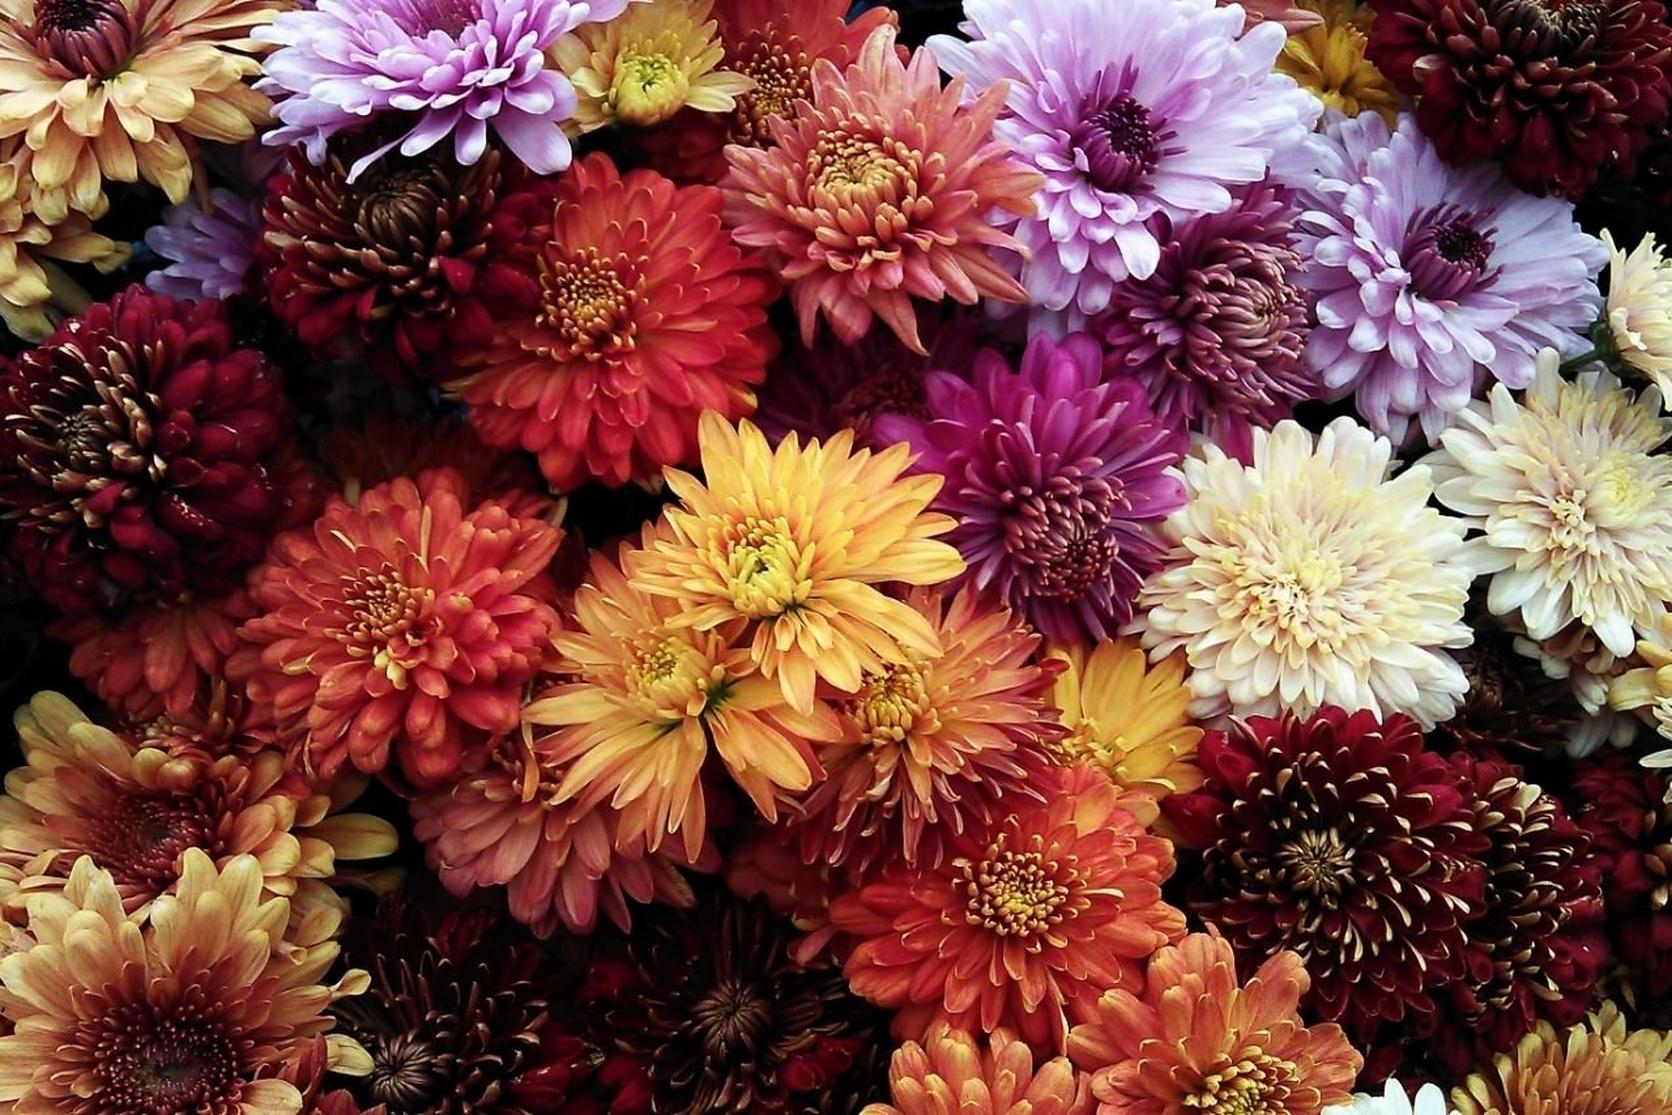 Chrysanthemum Flower Meanings & Care Guide | Interflora